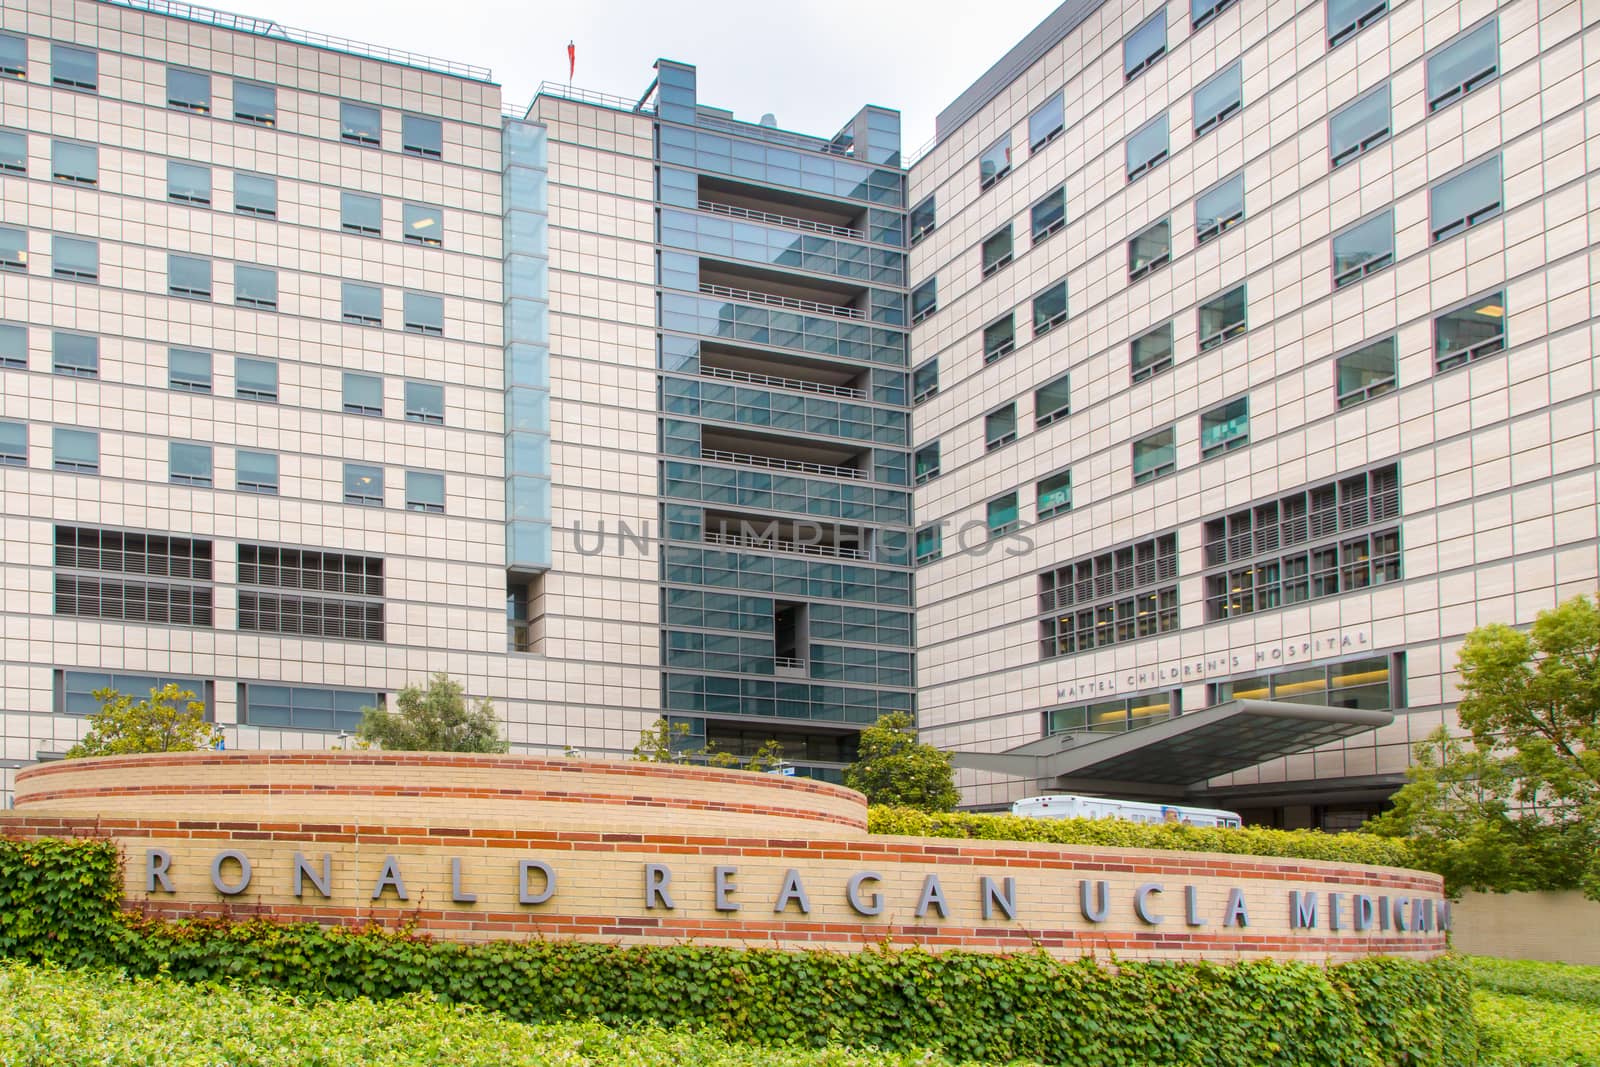 LOS ANGELES, CA/USA - MAY 25, 2015: Mattel Children's Hopital at Ronald Reagan UCLA Medical Center.